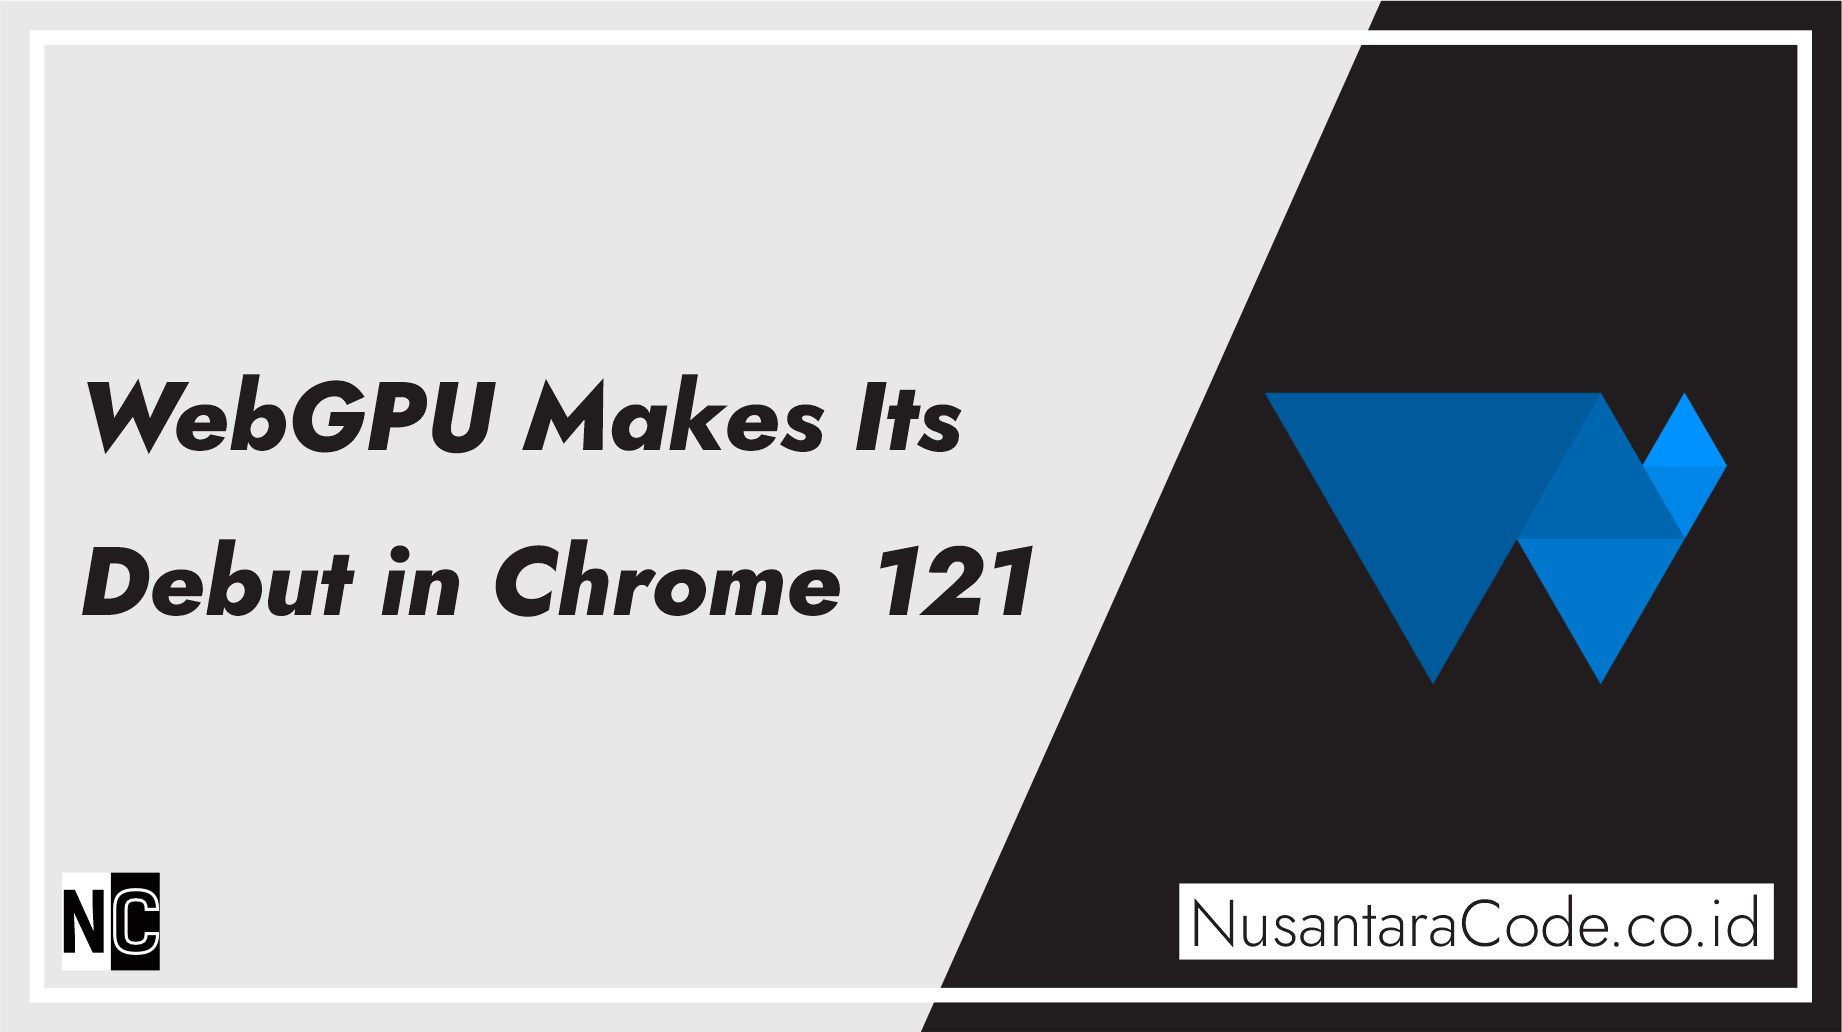 WebGPU Makes Its Debut in Chrome 121